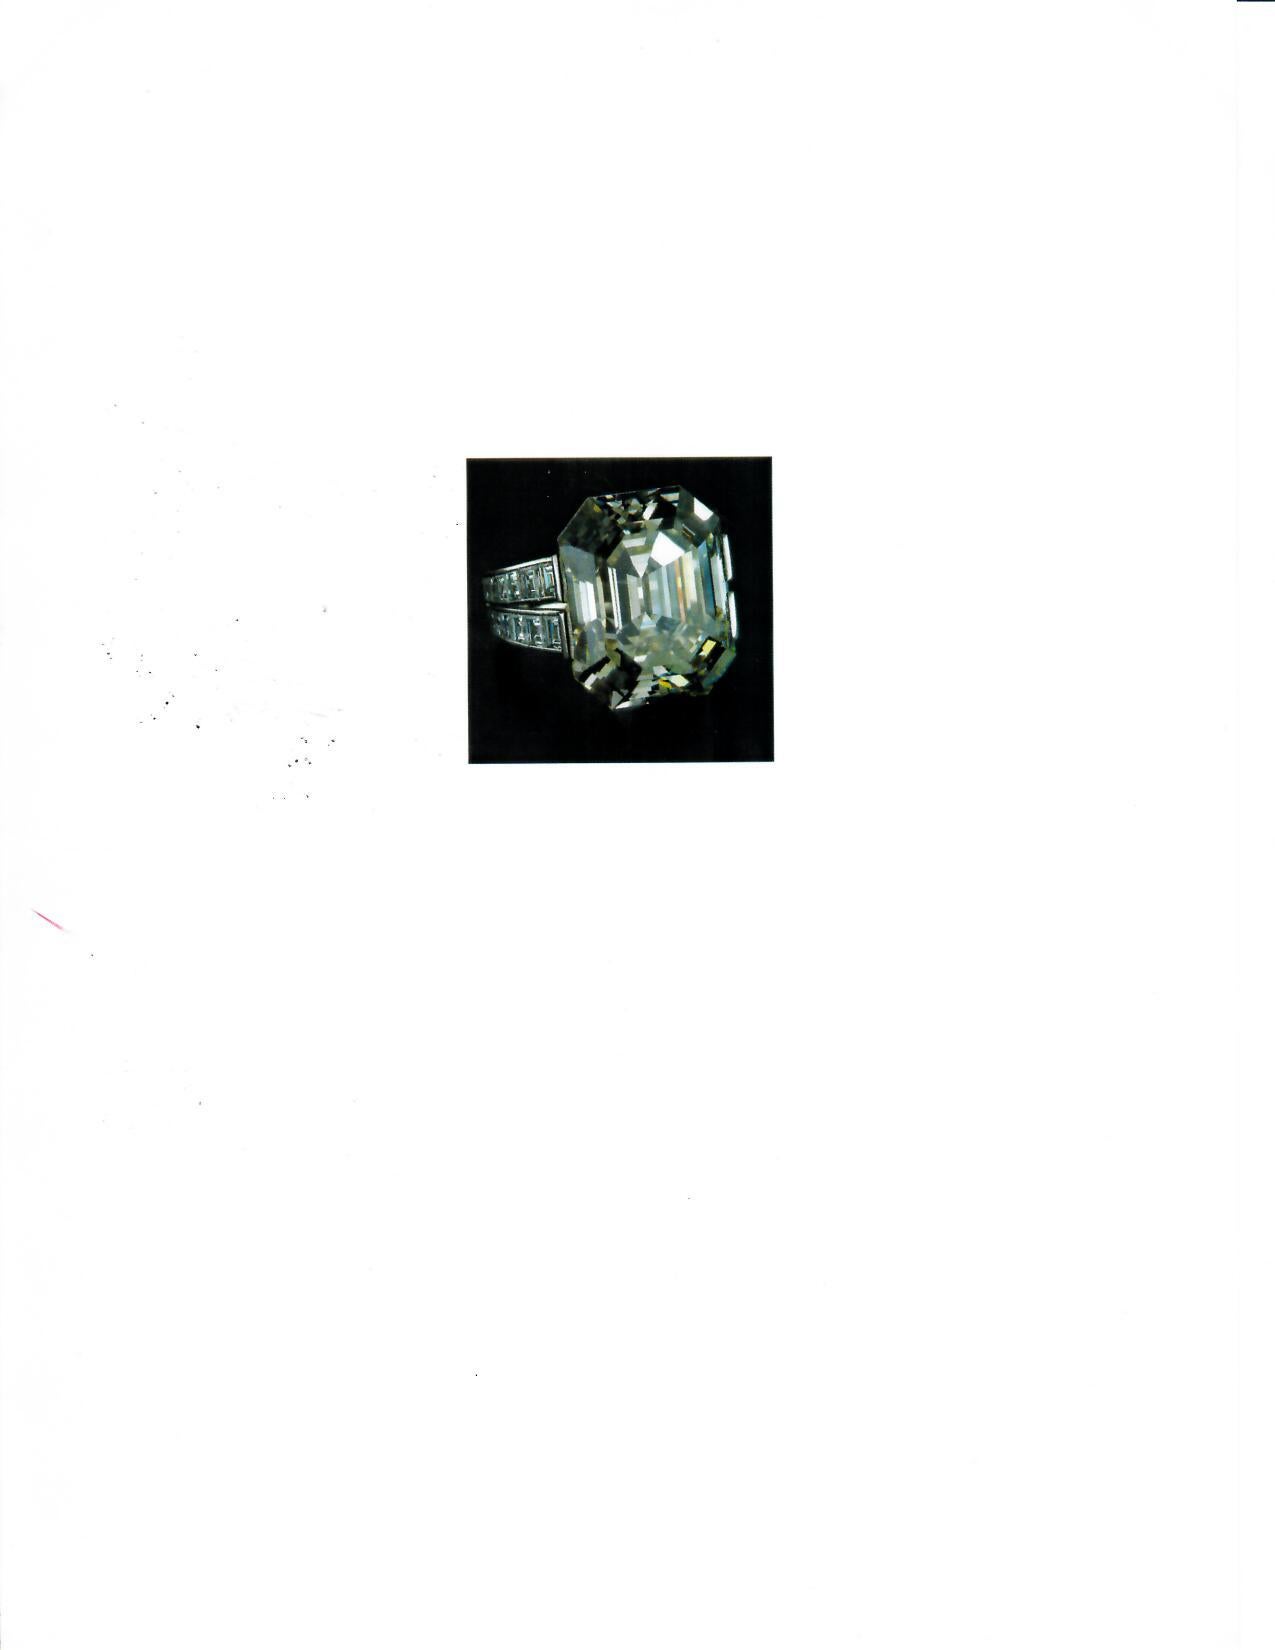 Cartier Monture 30.03 Carat GIA Certified Emerald Cut Diamond Engagement Ring 2